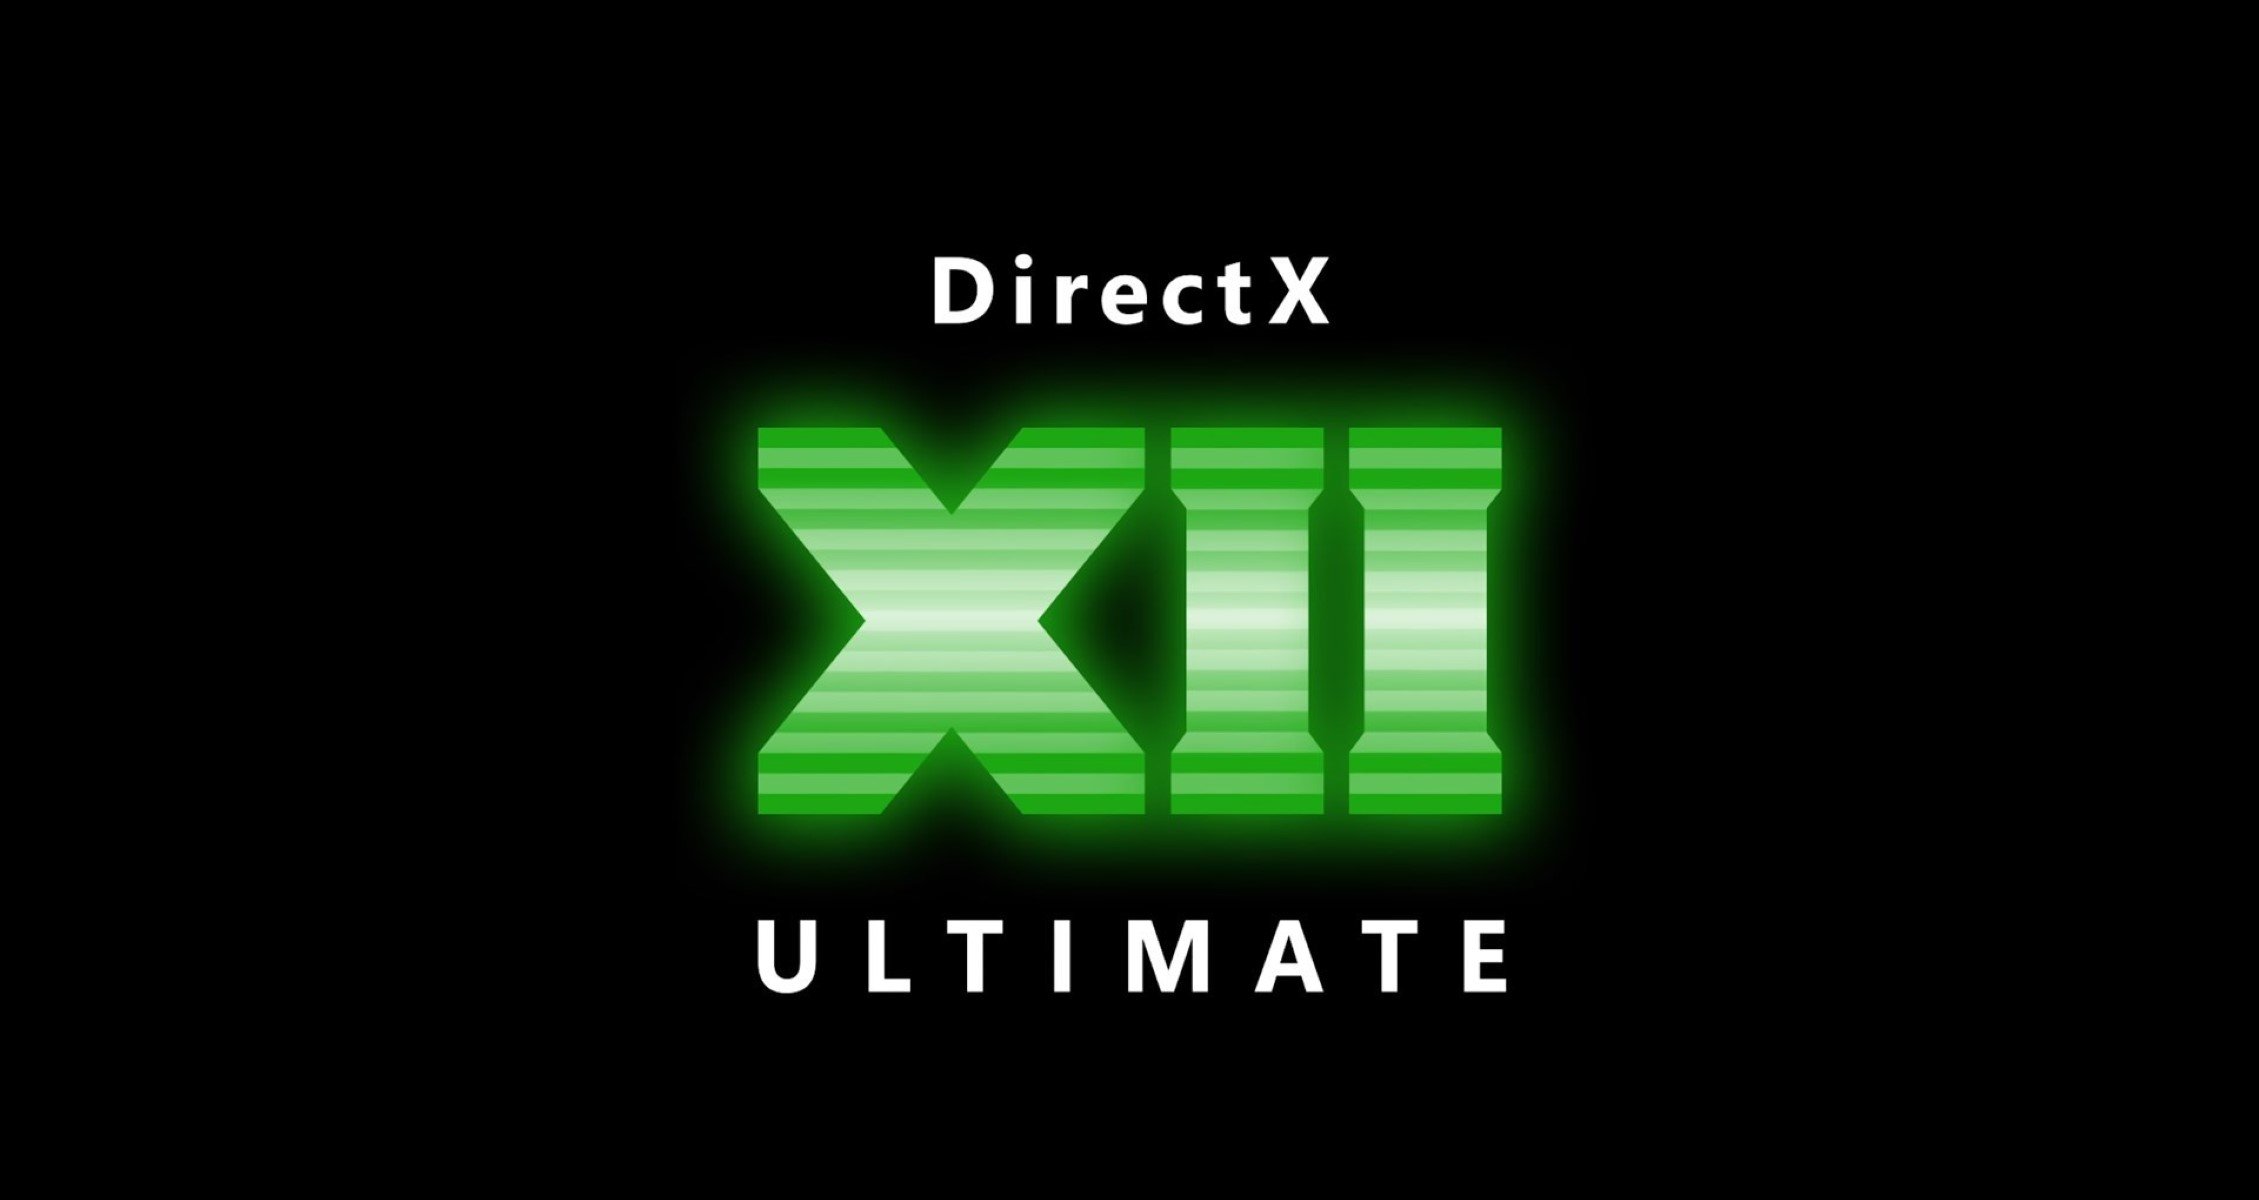 directx 12 diagnostic tool display (directx12 Ultimate : disabled